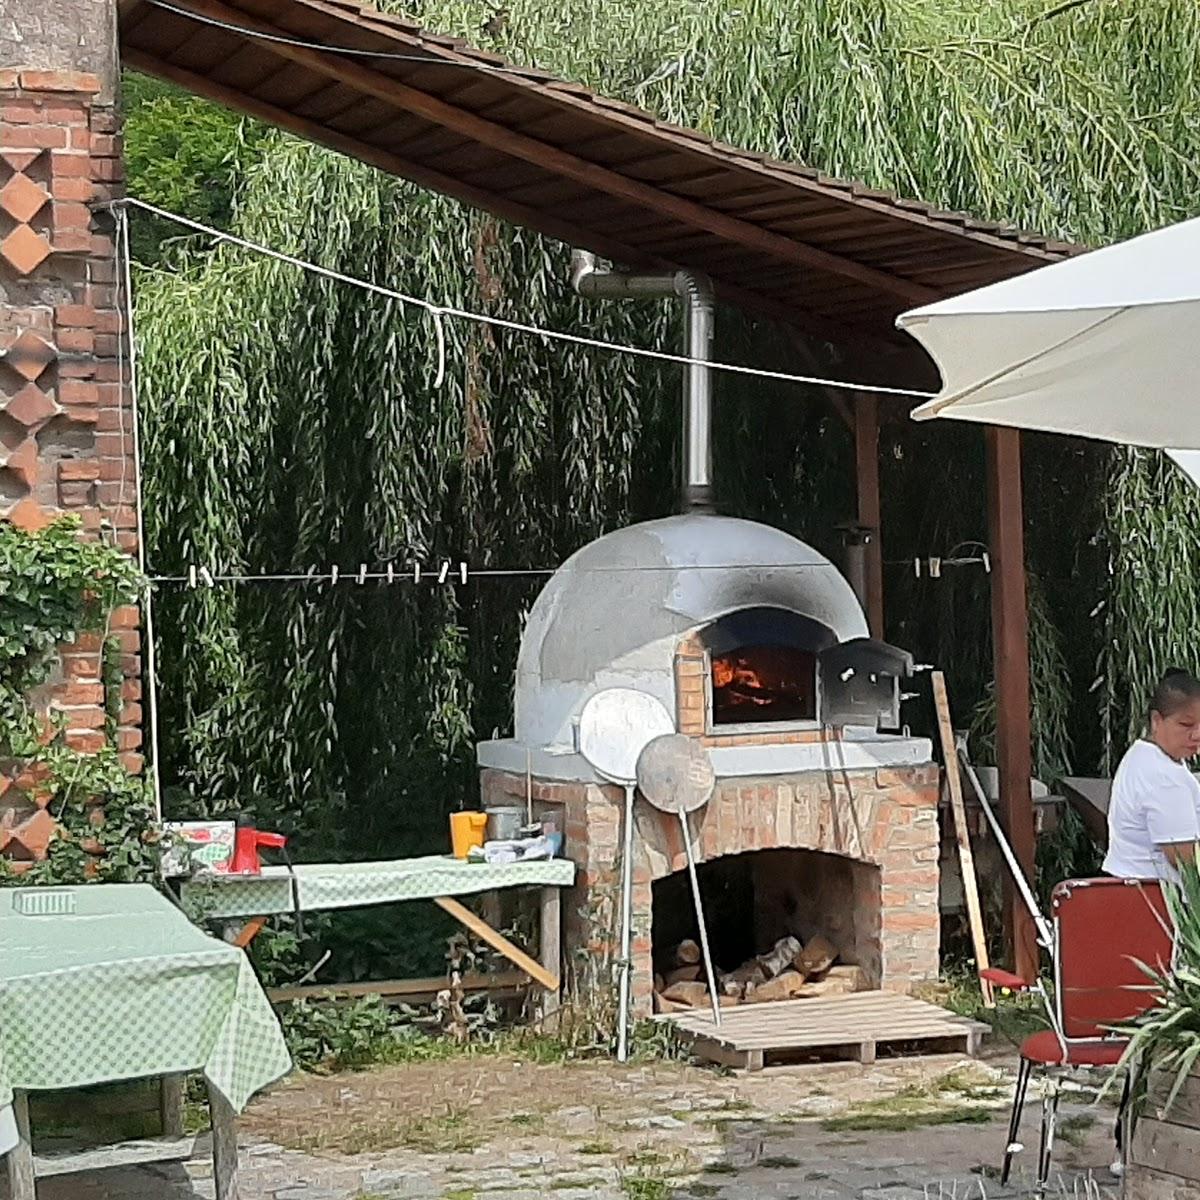 Restaurant "Pizzeria Cocolores" in Bad Belzig